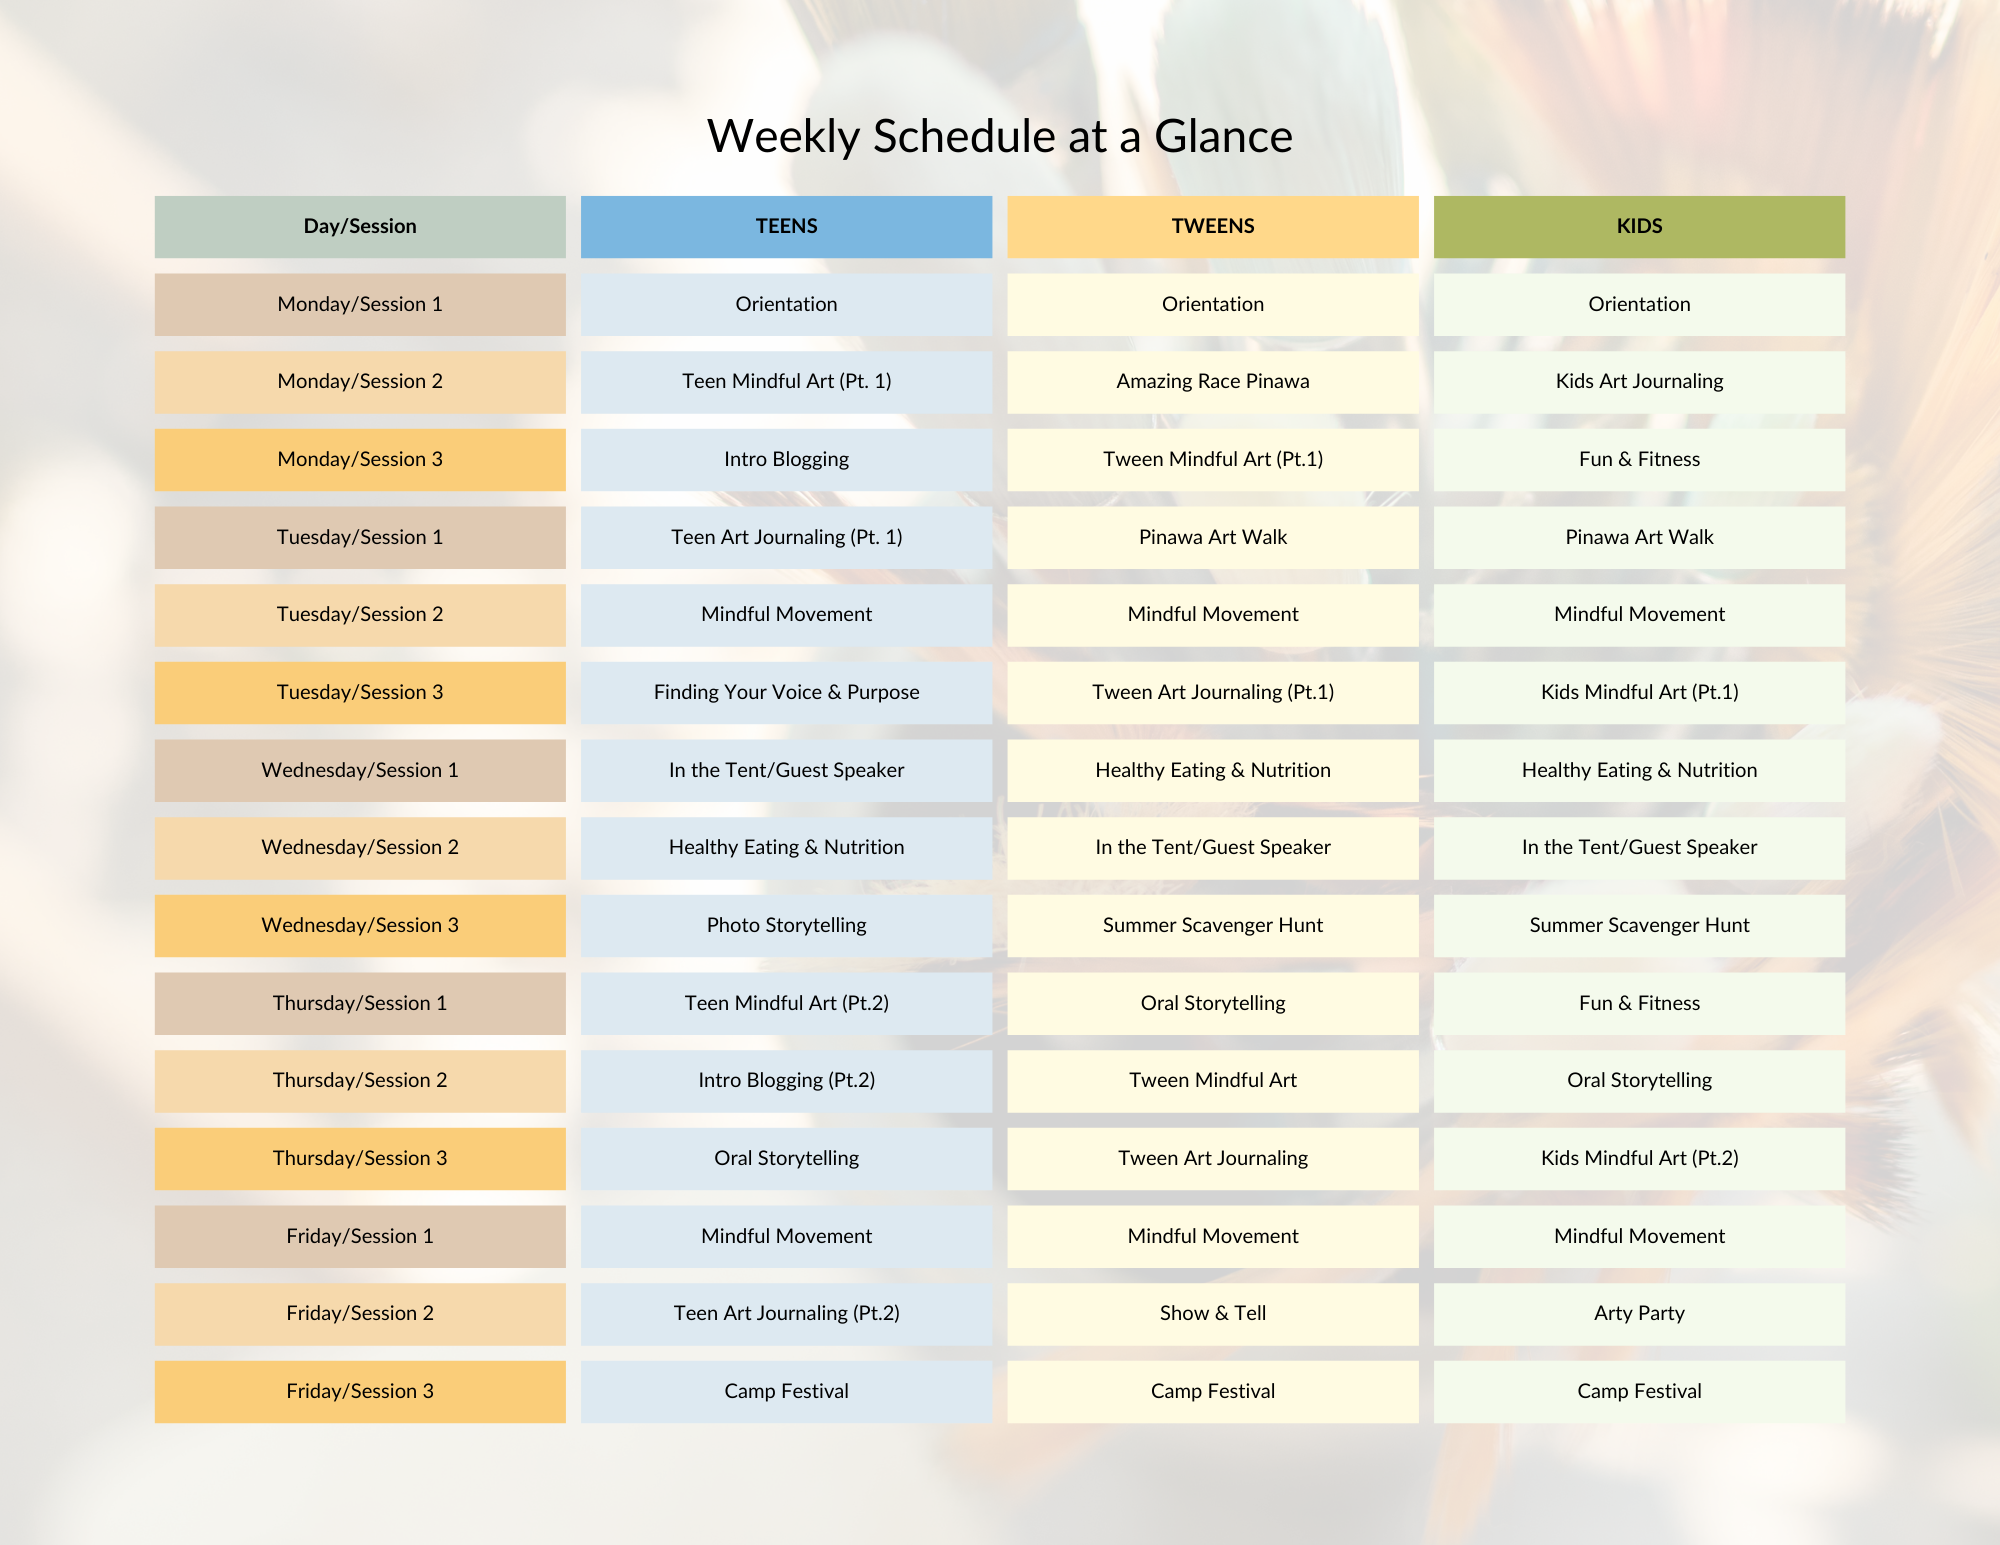 Image showing weekly schedule for kids, tweens, and teens.